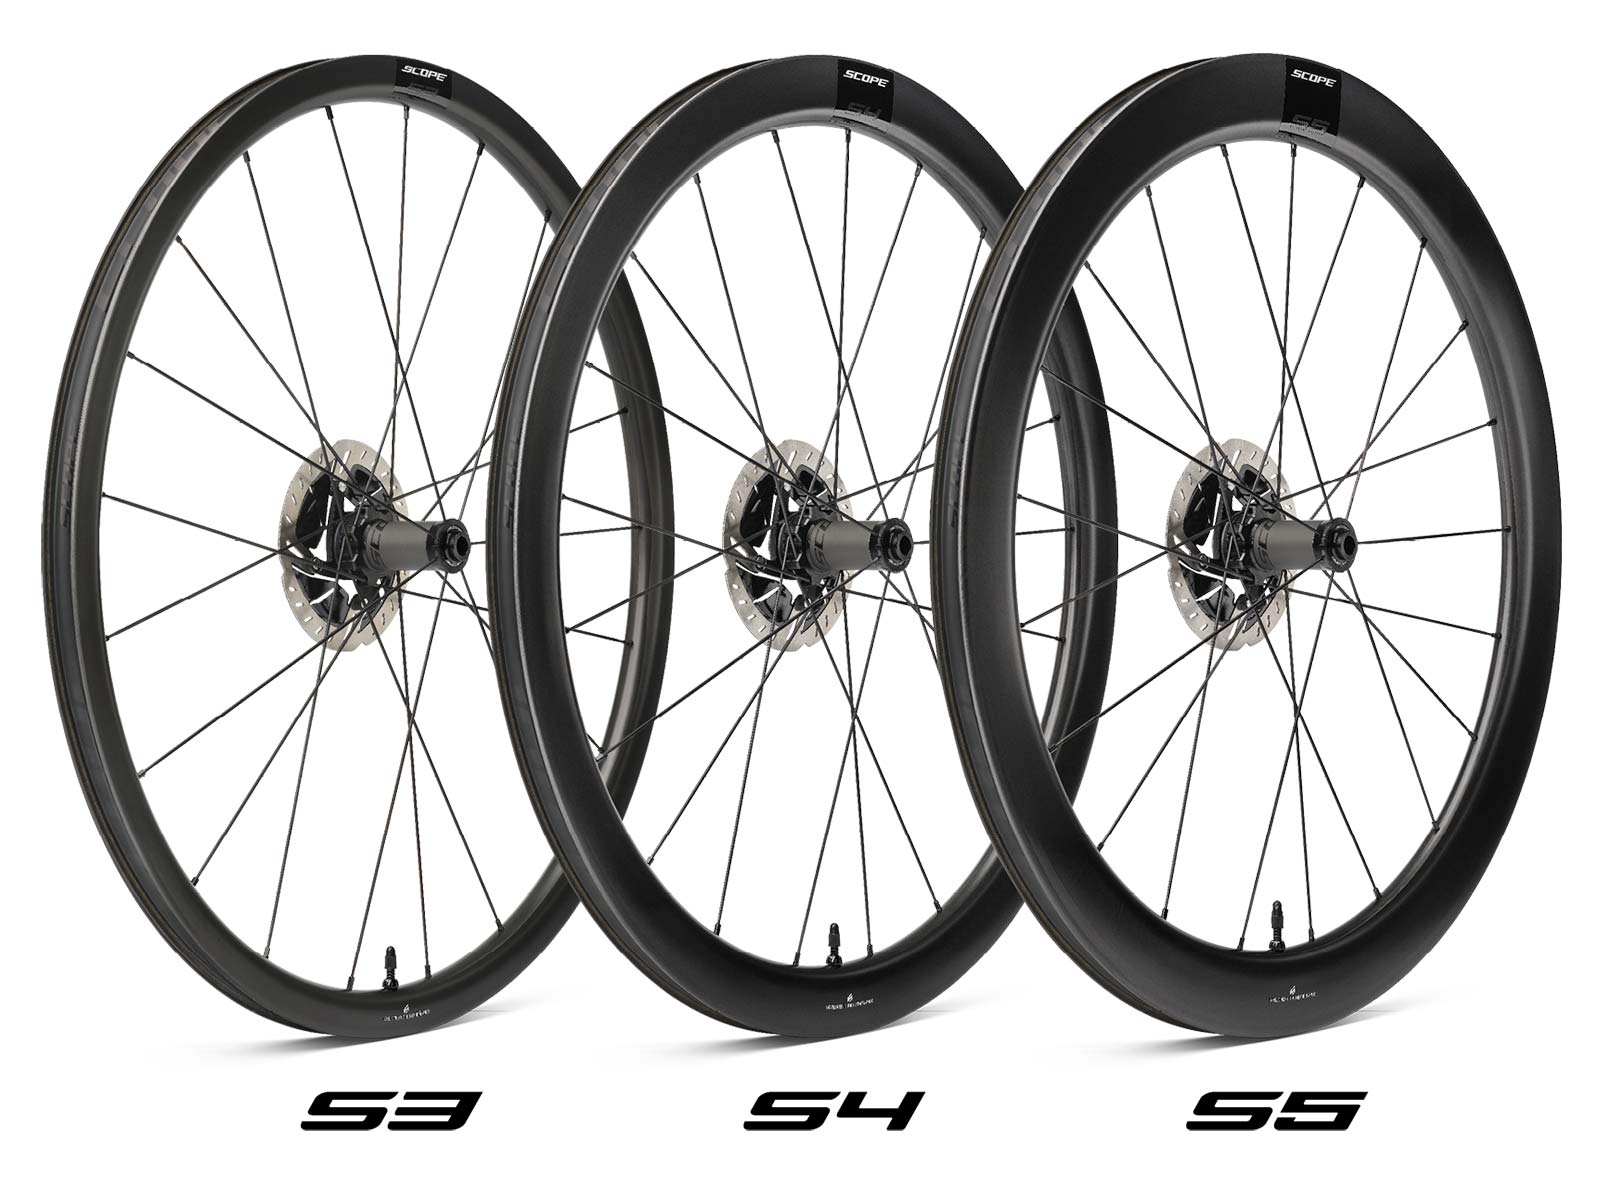 Scope Sport affordable carbon tubeless road wheels, 998€ for rim or disc brakes, 3 depths